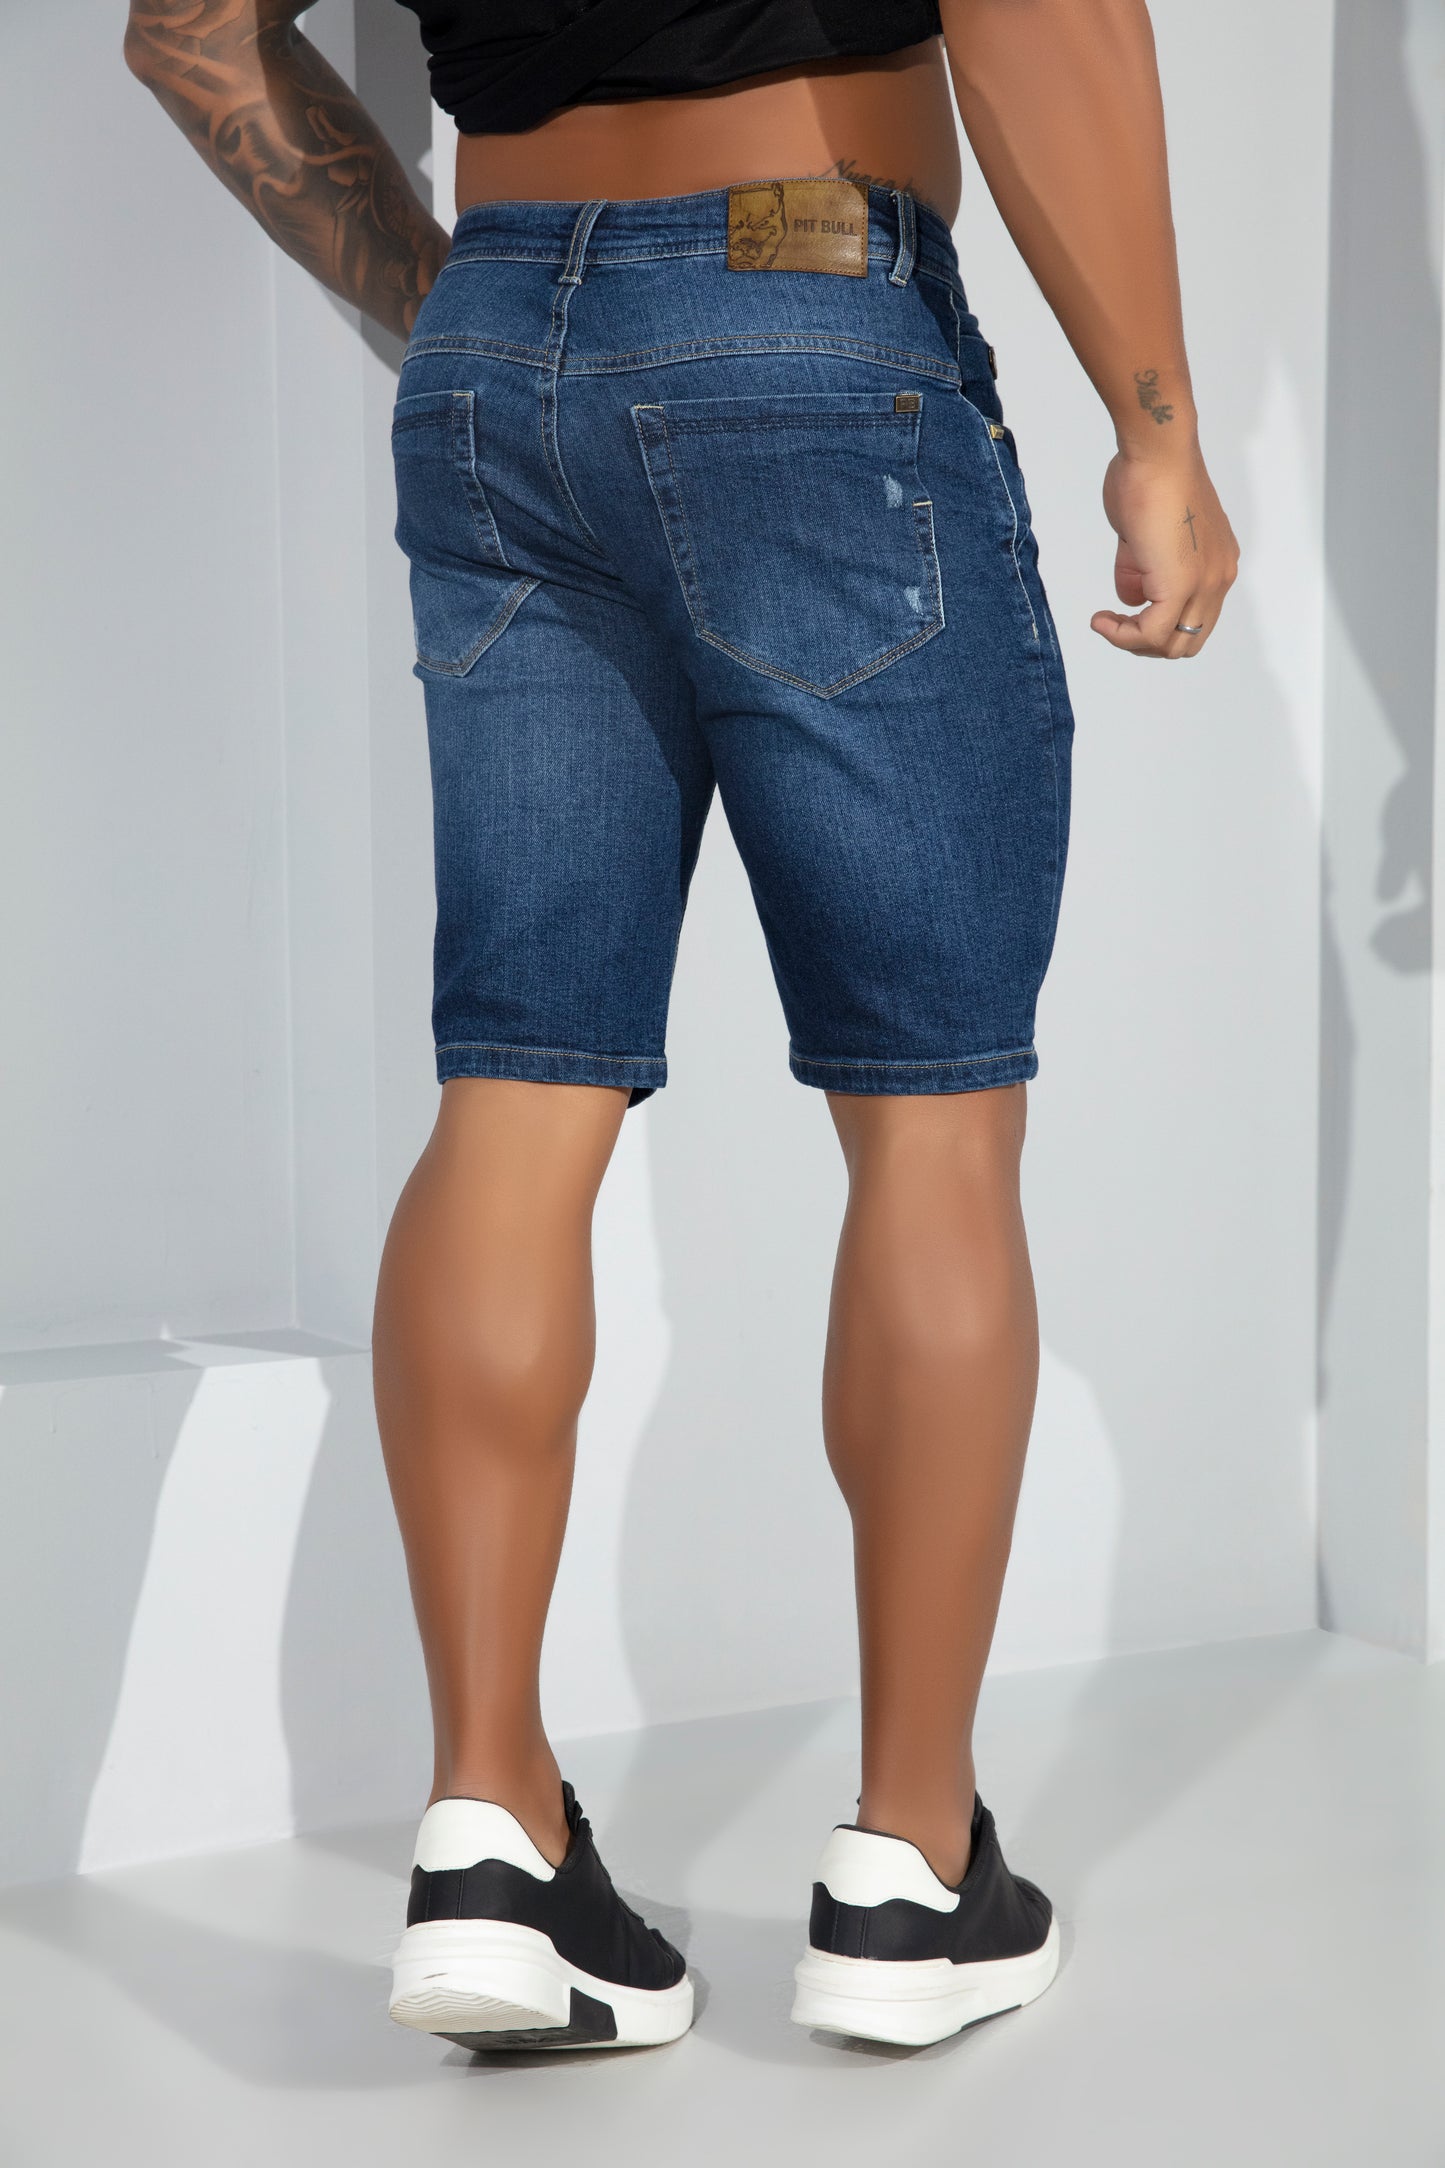 Pit Bull Jeans Men's Jeans Shorts  80915